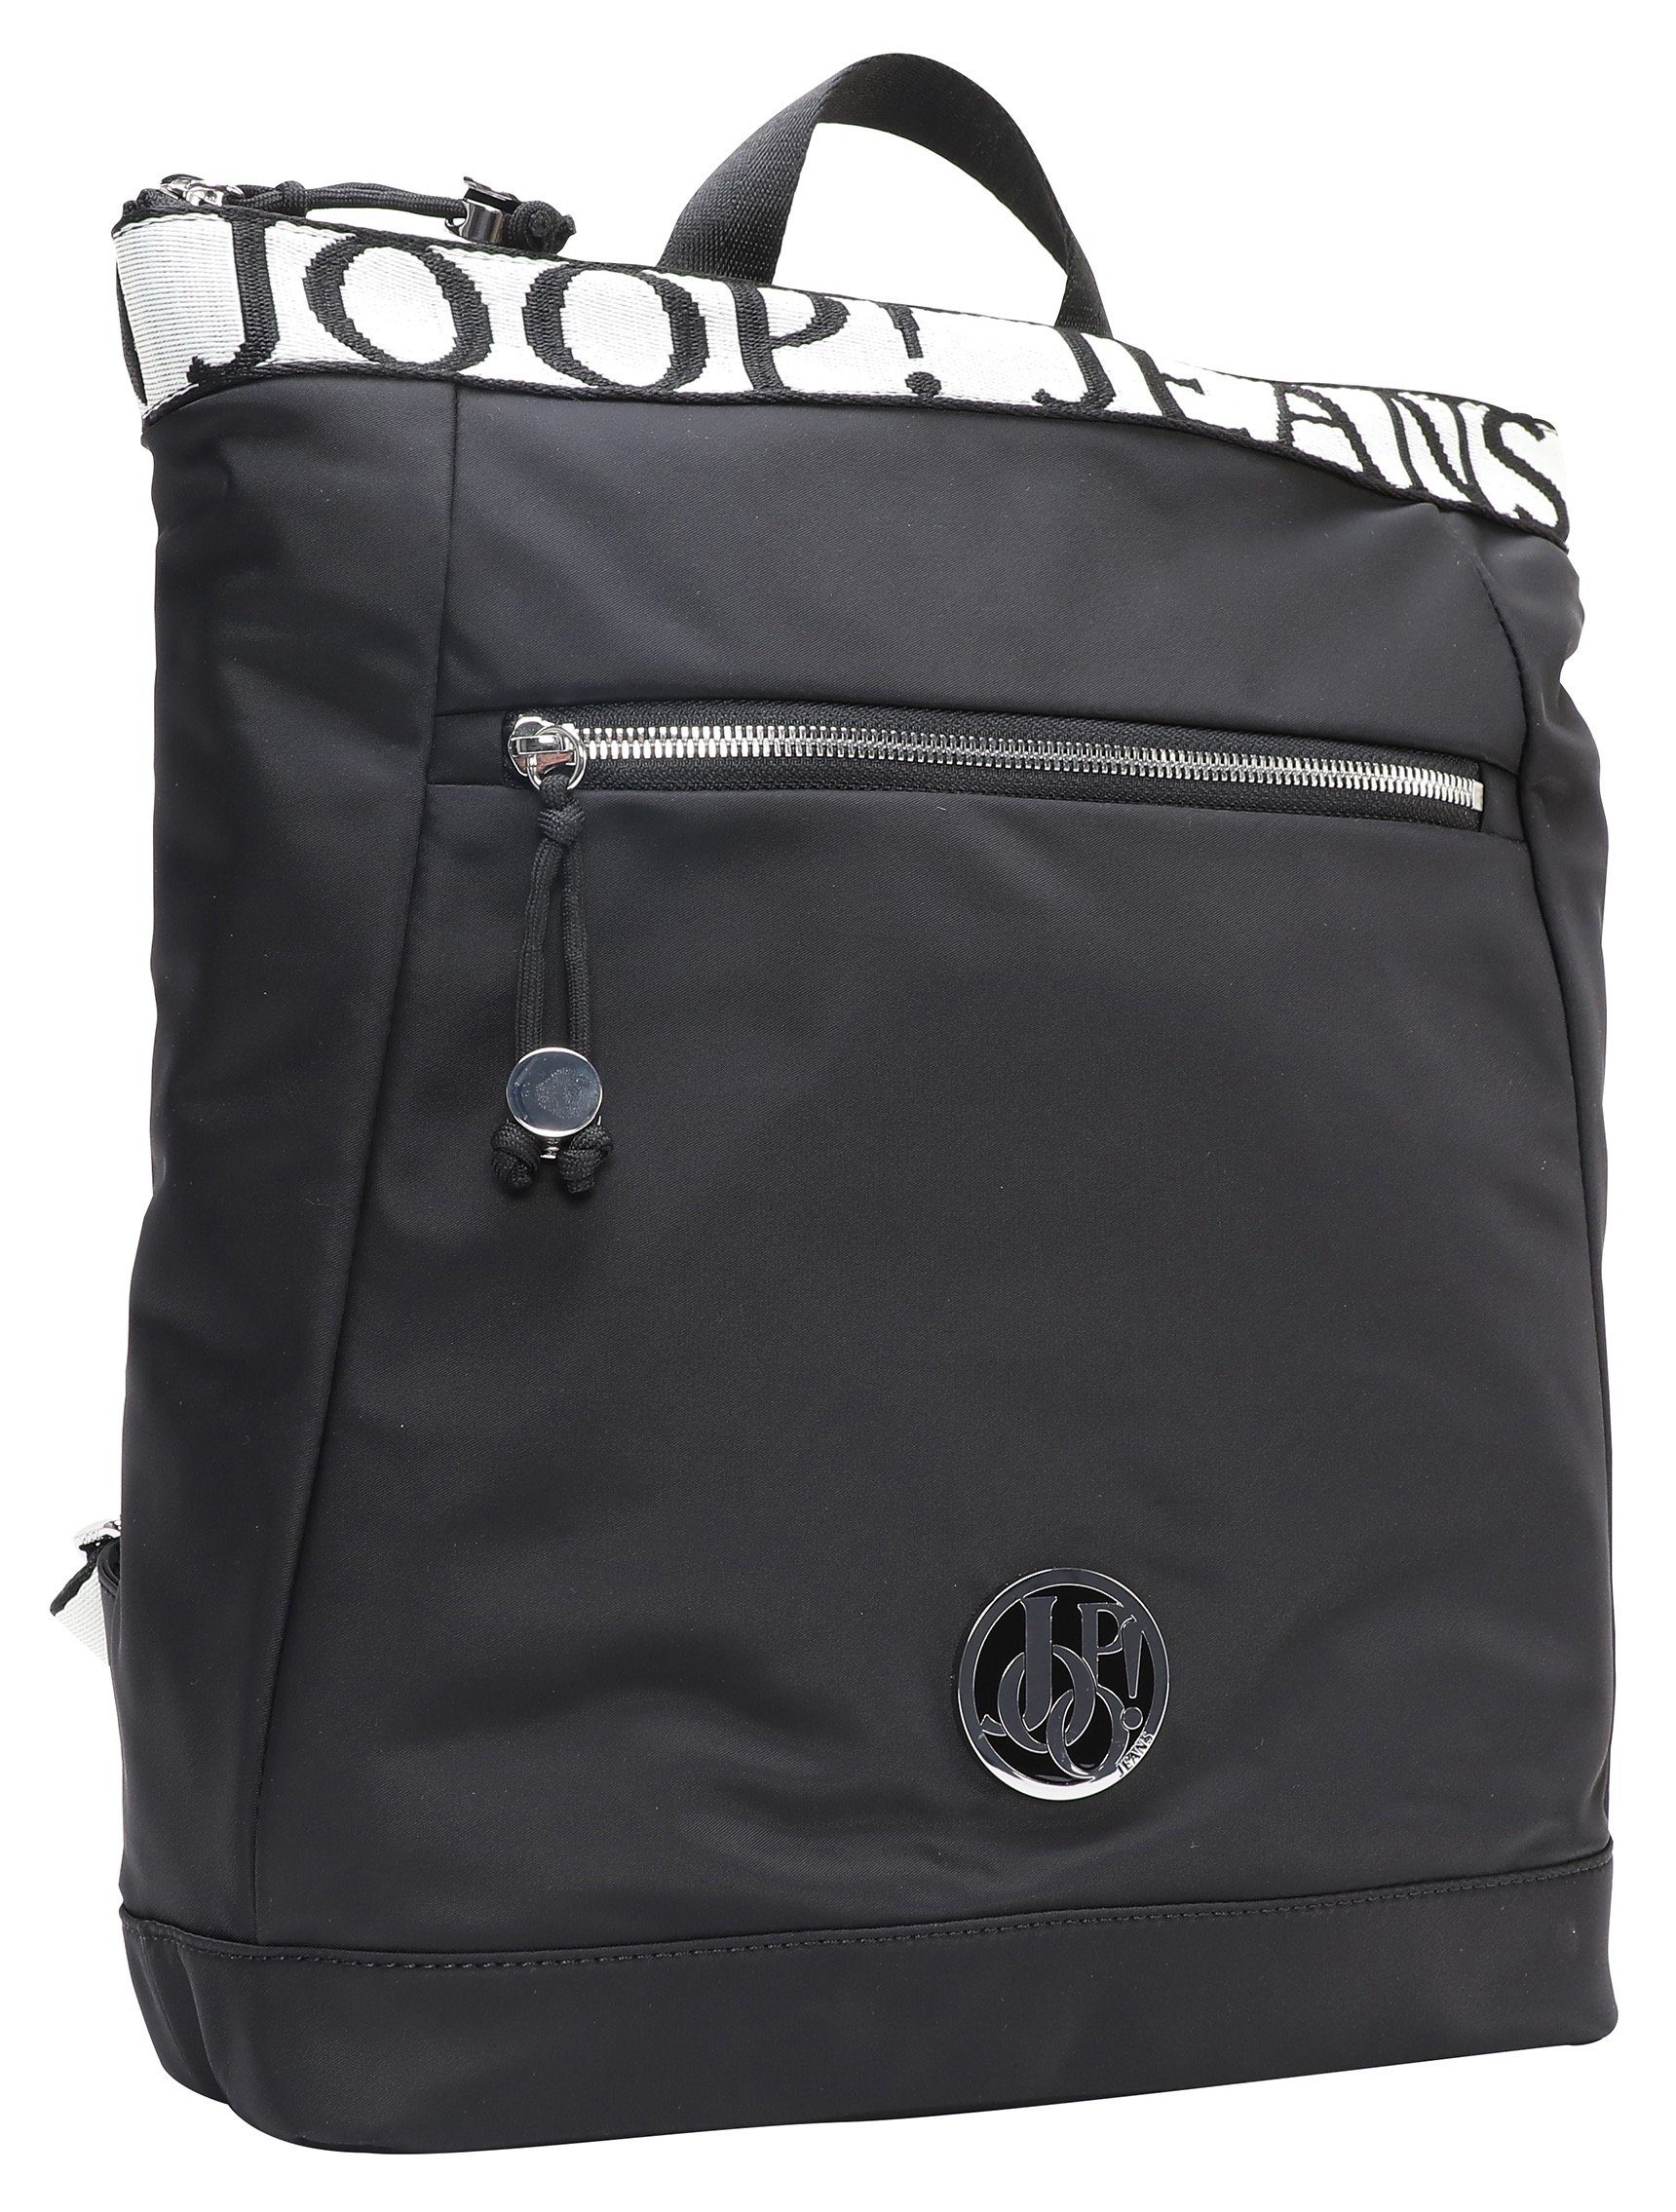 Joop Jeans Cityrucksack lietissimo elva backpack lvz, mit Logo Schriftzug auf den Trageriemen black